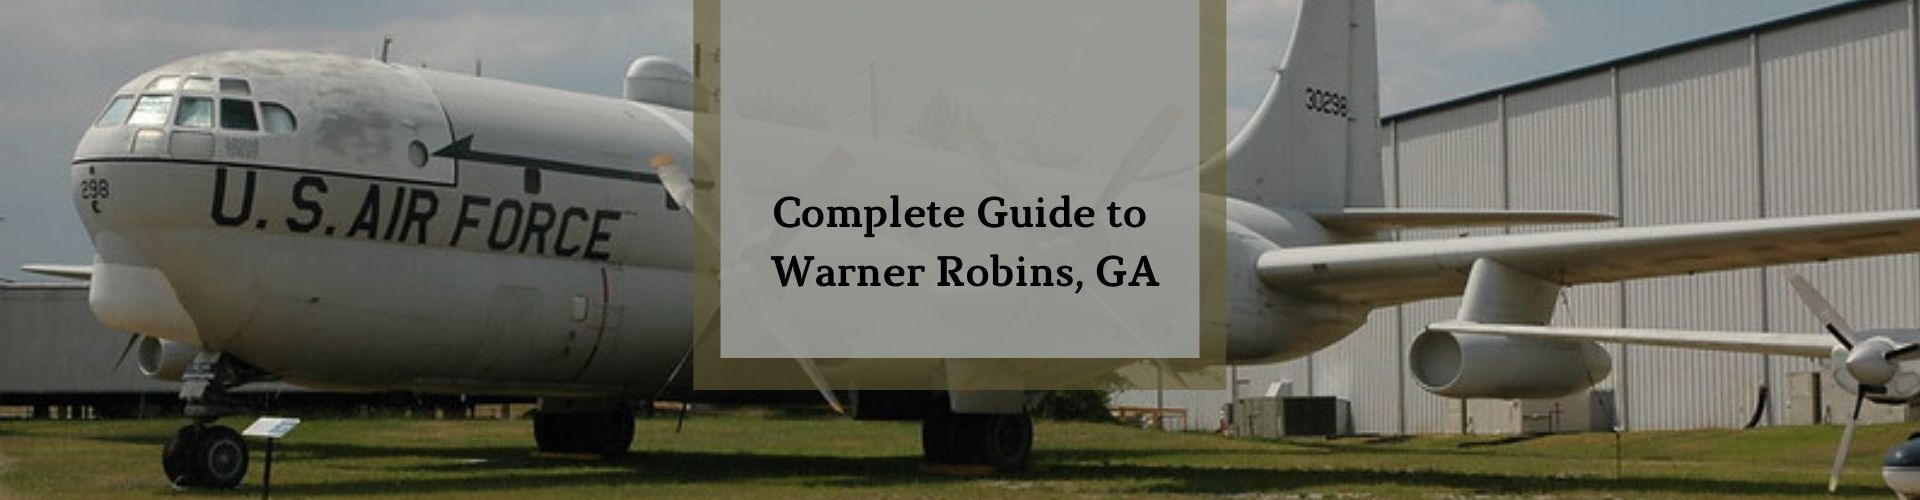 Warner Robins GA